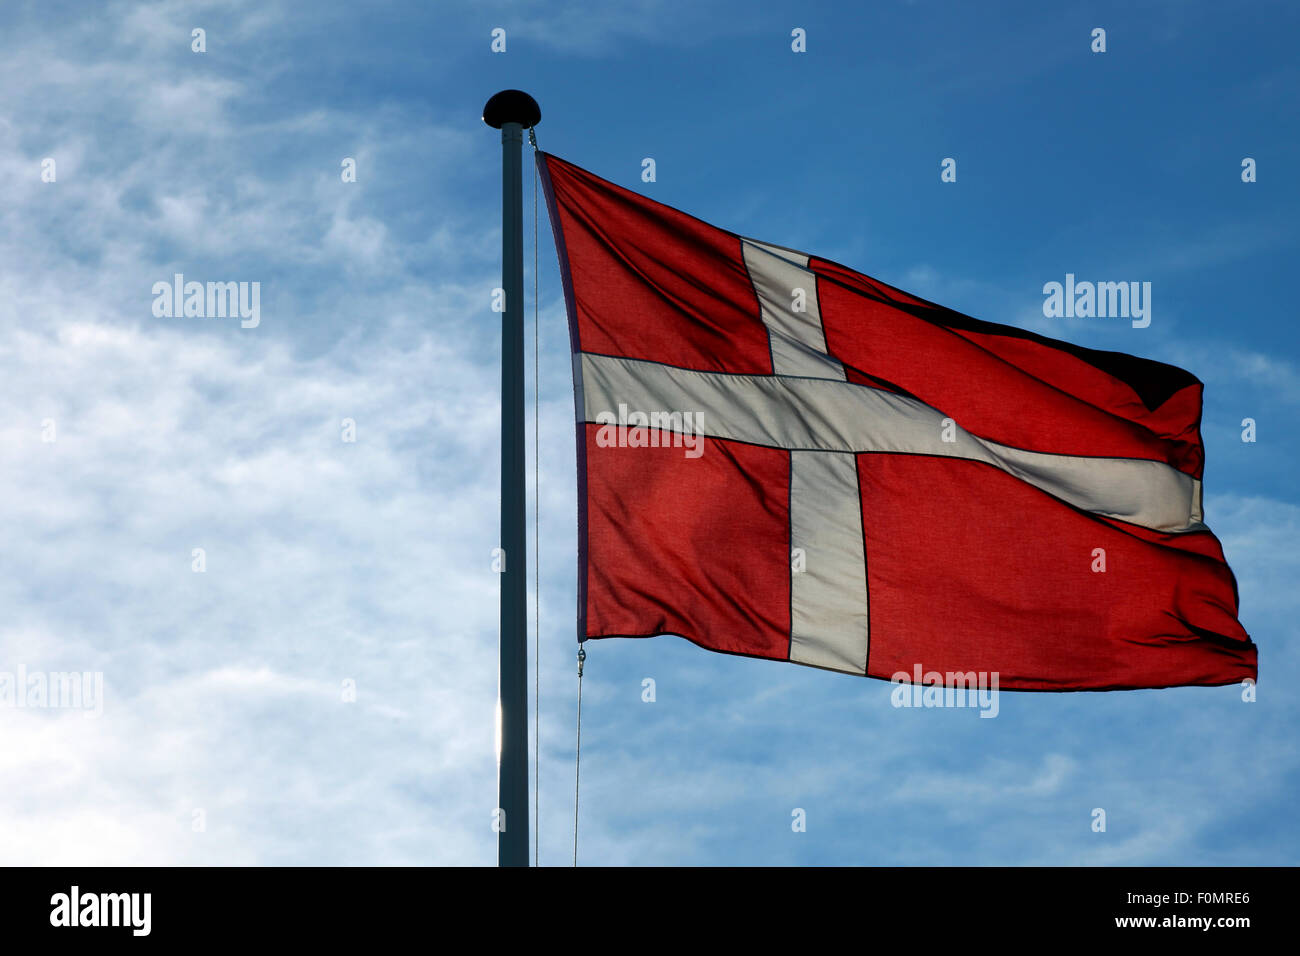 The Danish flag Dannebrog waving against blue sky Stock Photo